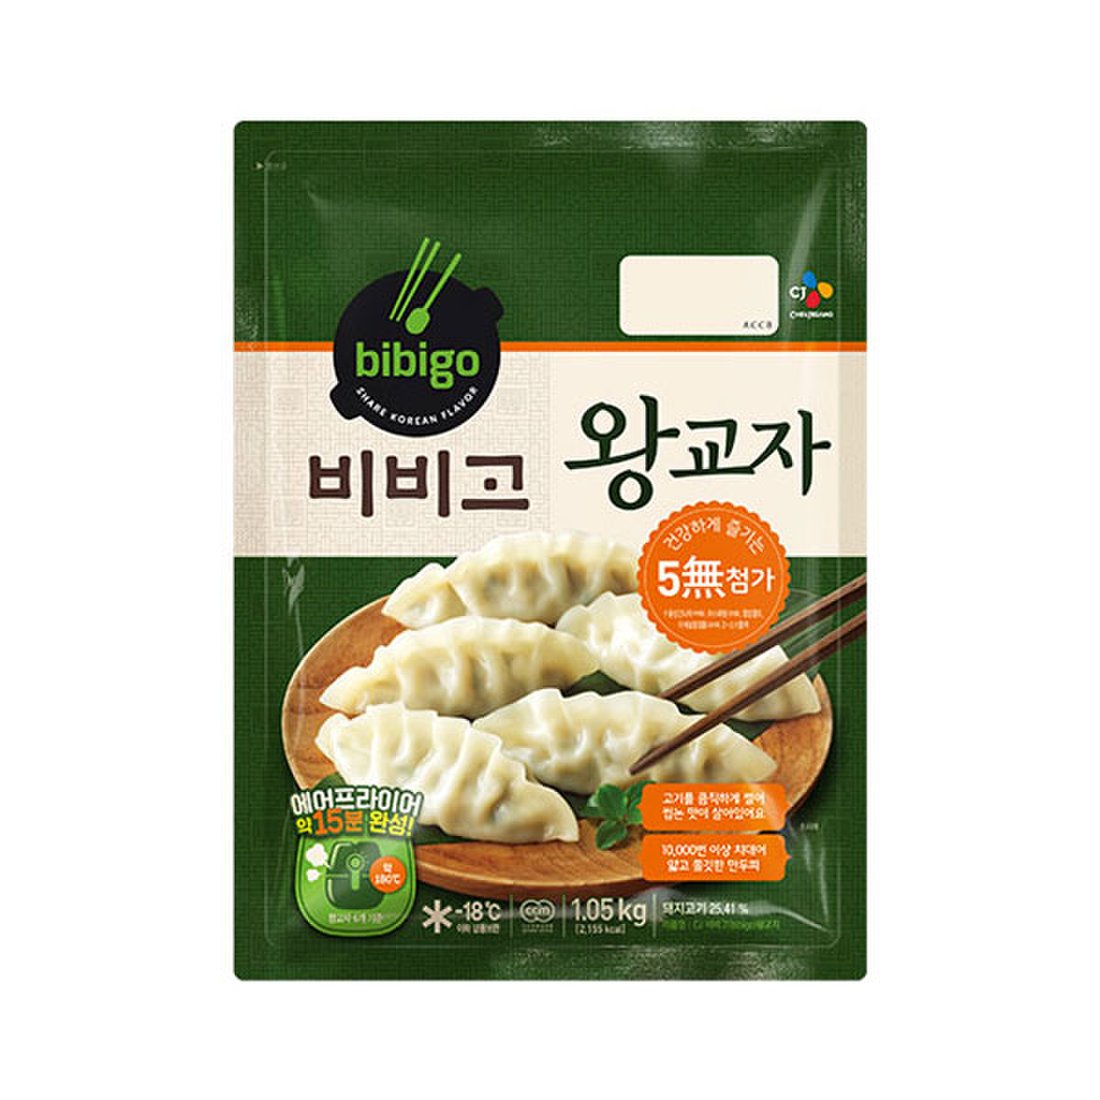 Bibigo pork & vegetable dumpling 왕교자만두 500g